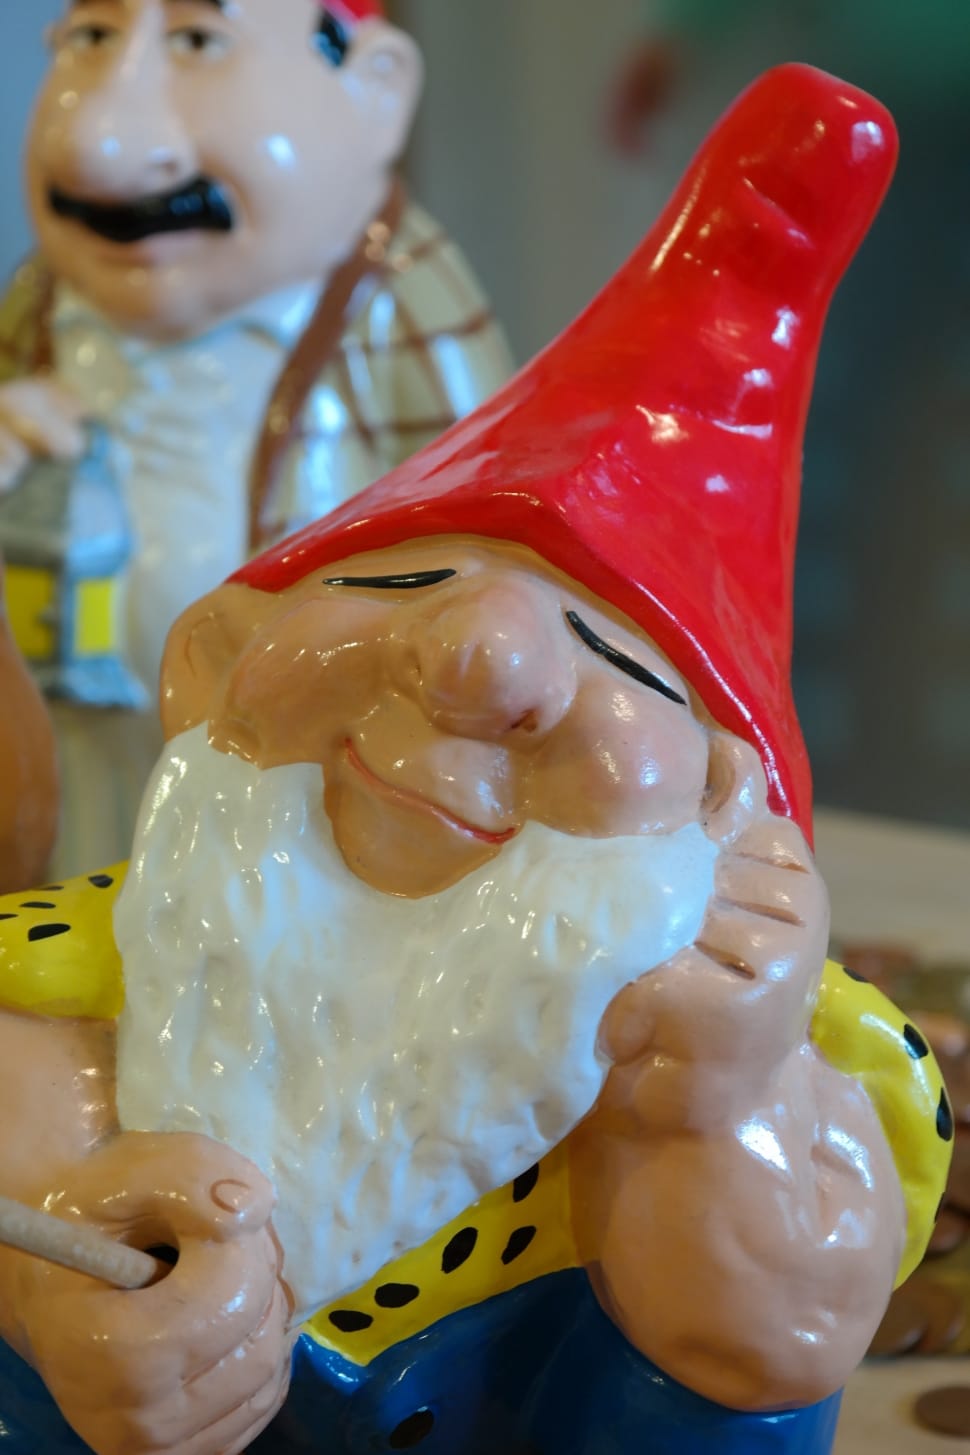 garden gnome wearing yellow shirt figurine preview